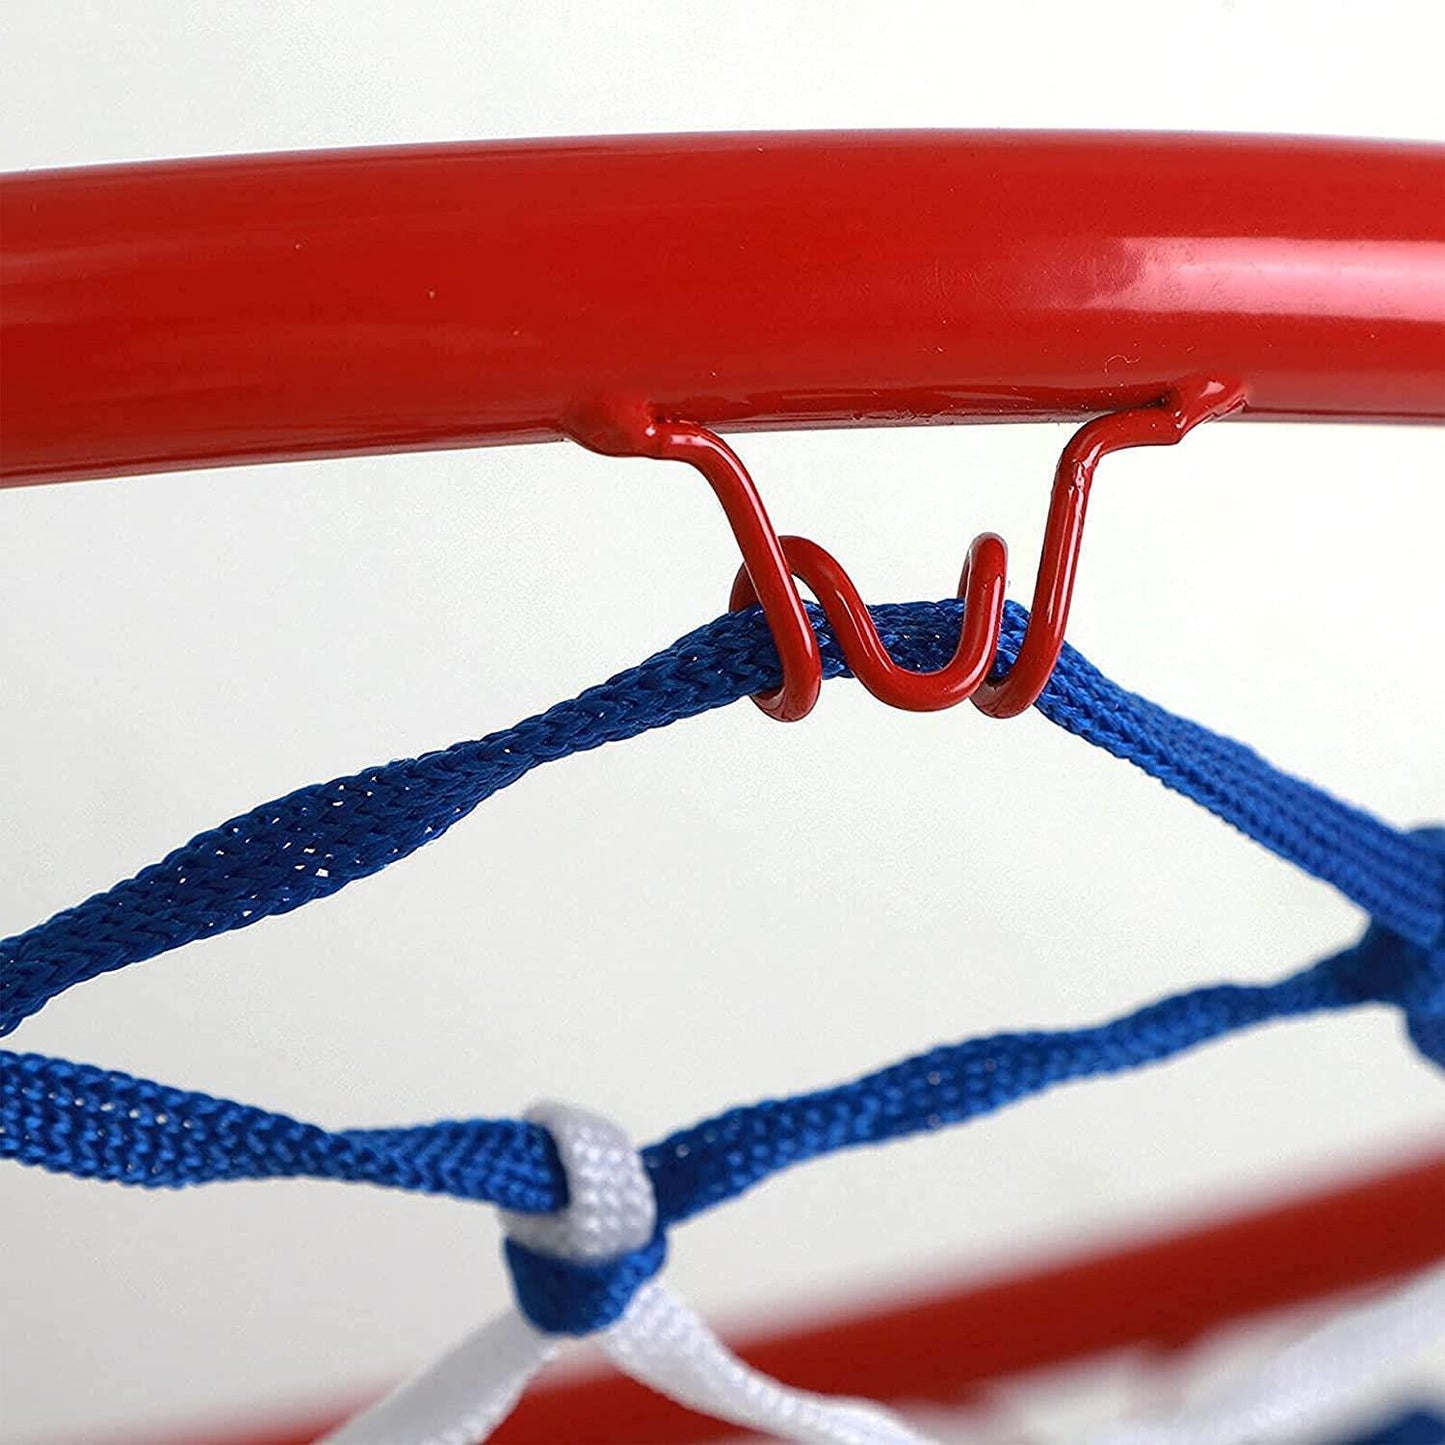 Basketball Hoop with Net - Wall-mounted by FastFold - UKBuyZone